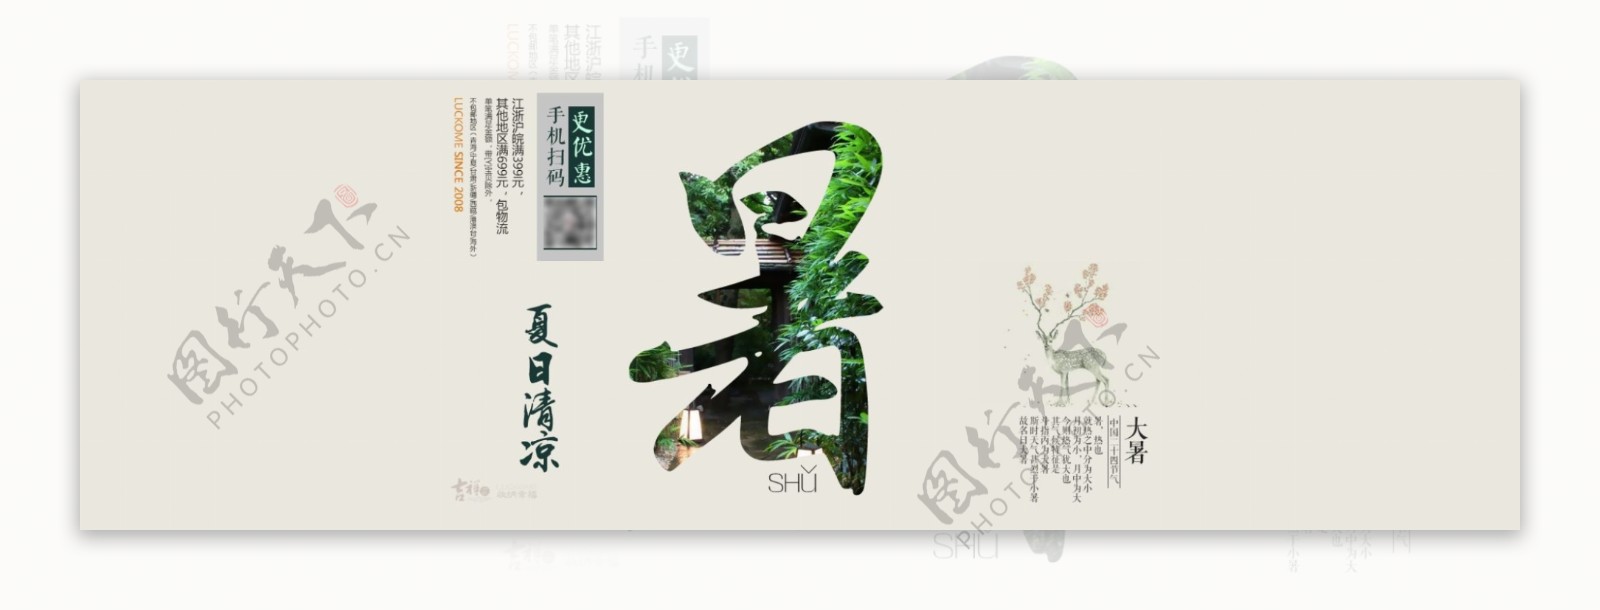 夏日清凉茶banner设计